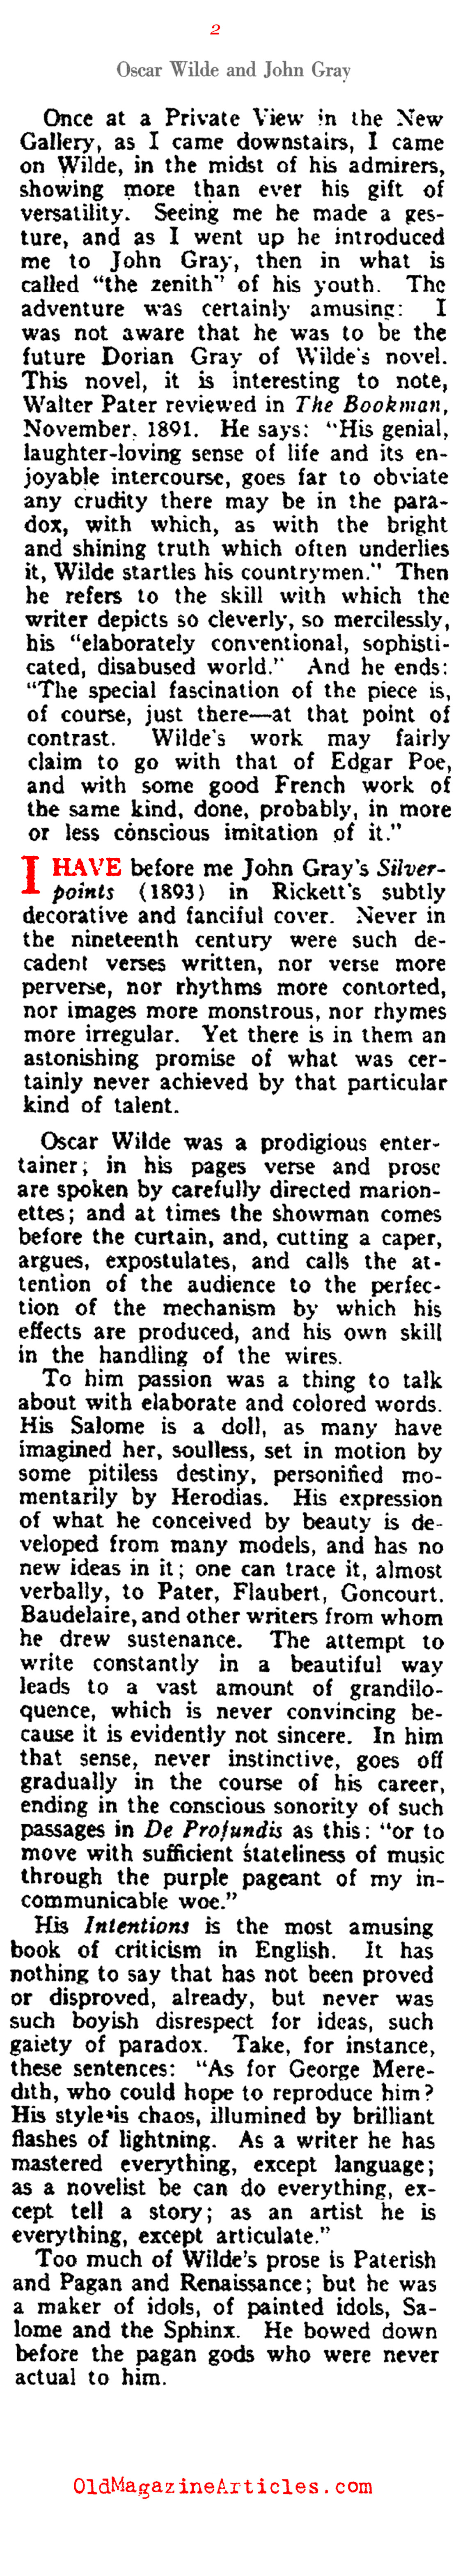 Who Was Wilde's Dorian Gray? (Vanity Fair Magazine, 1919)